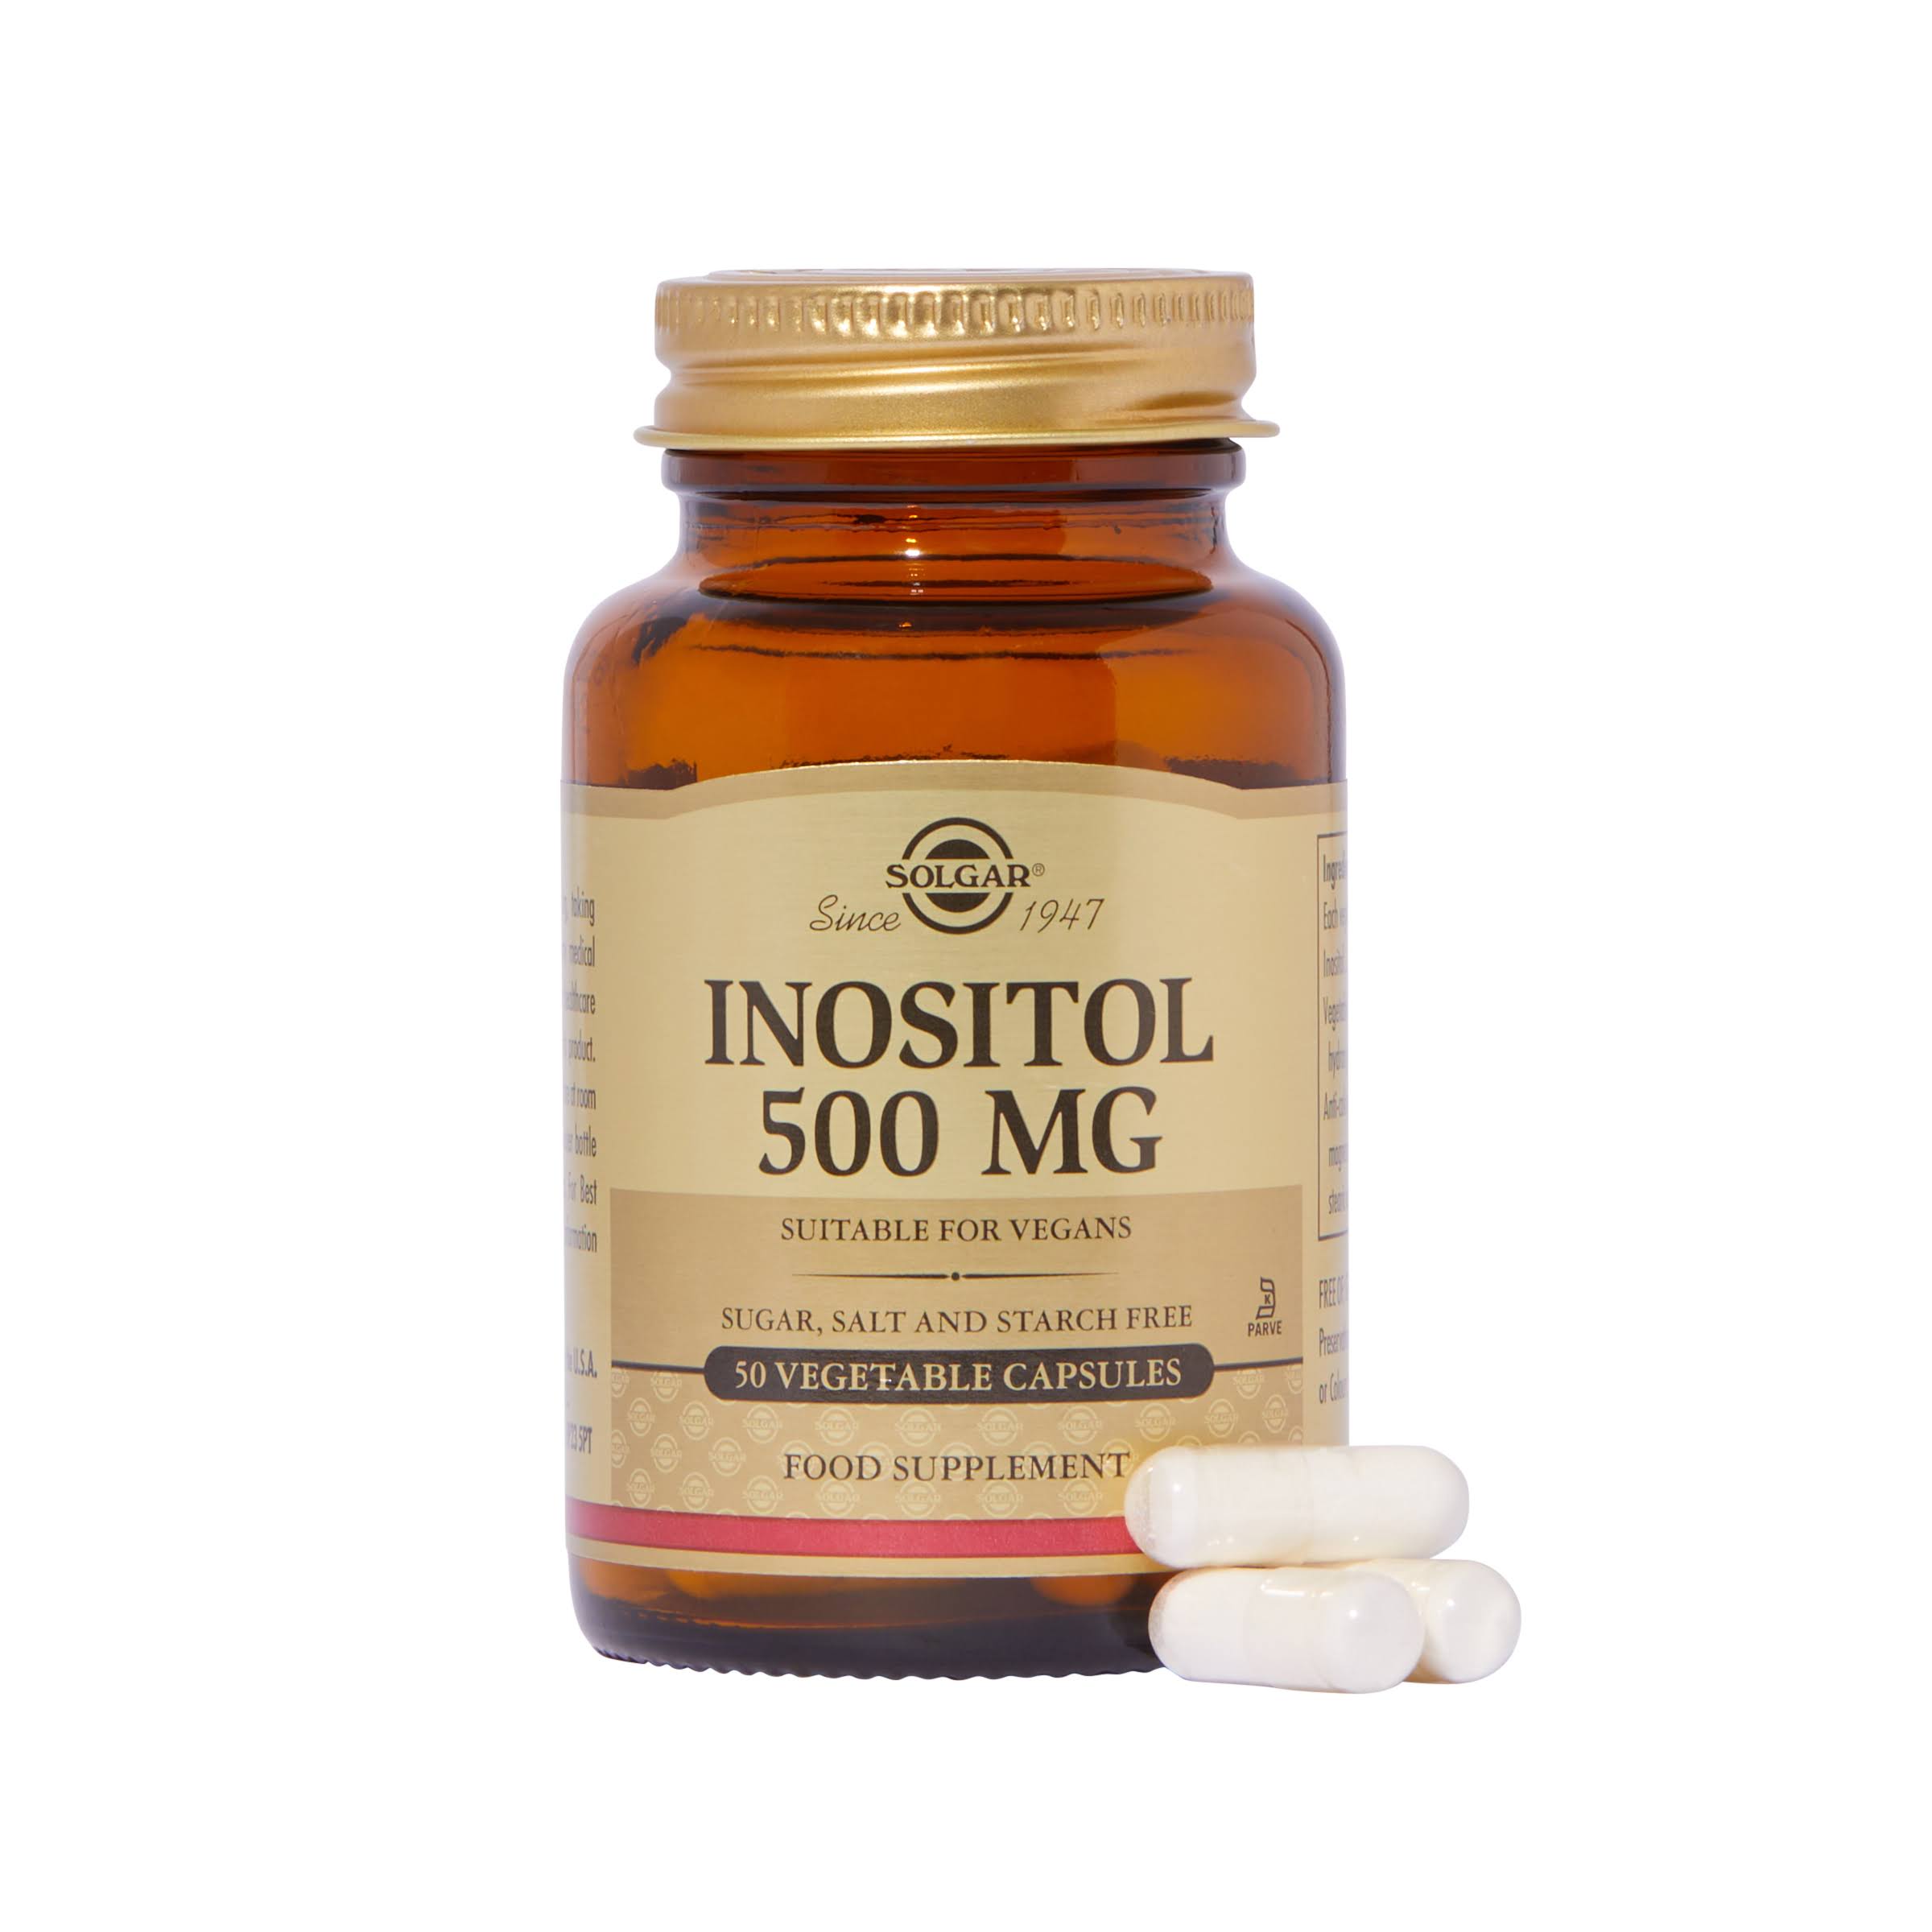 Solgar Inositol 500Mg Food Supplement - 50 Capsules